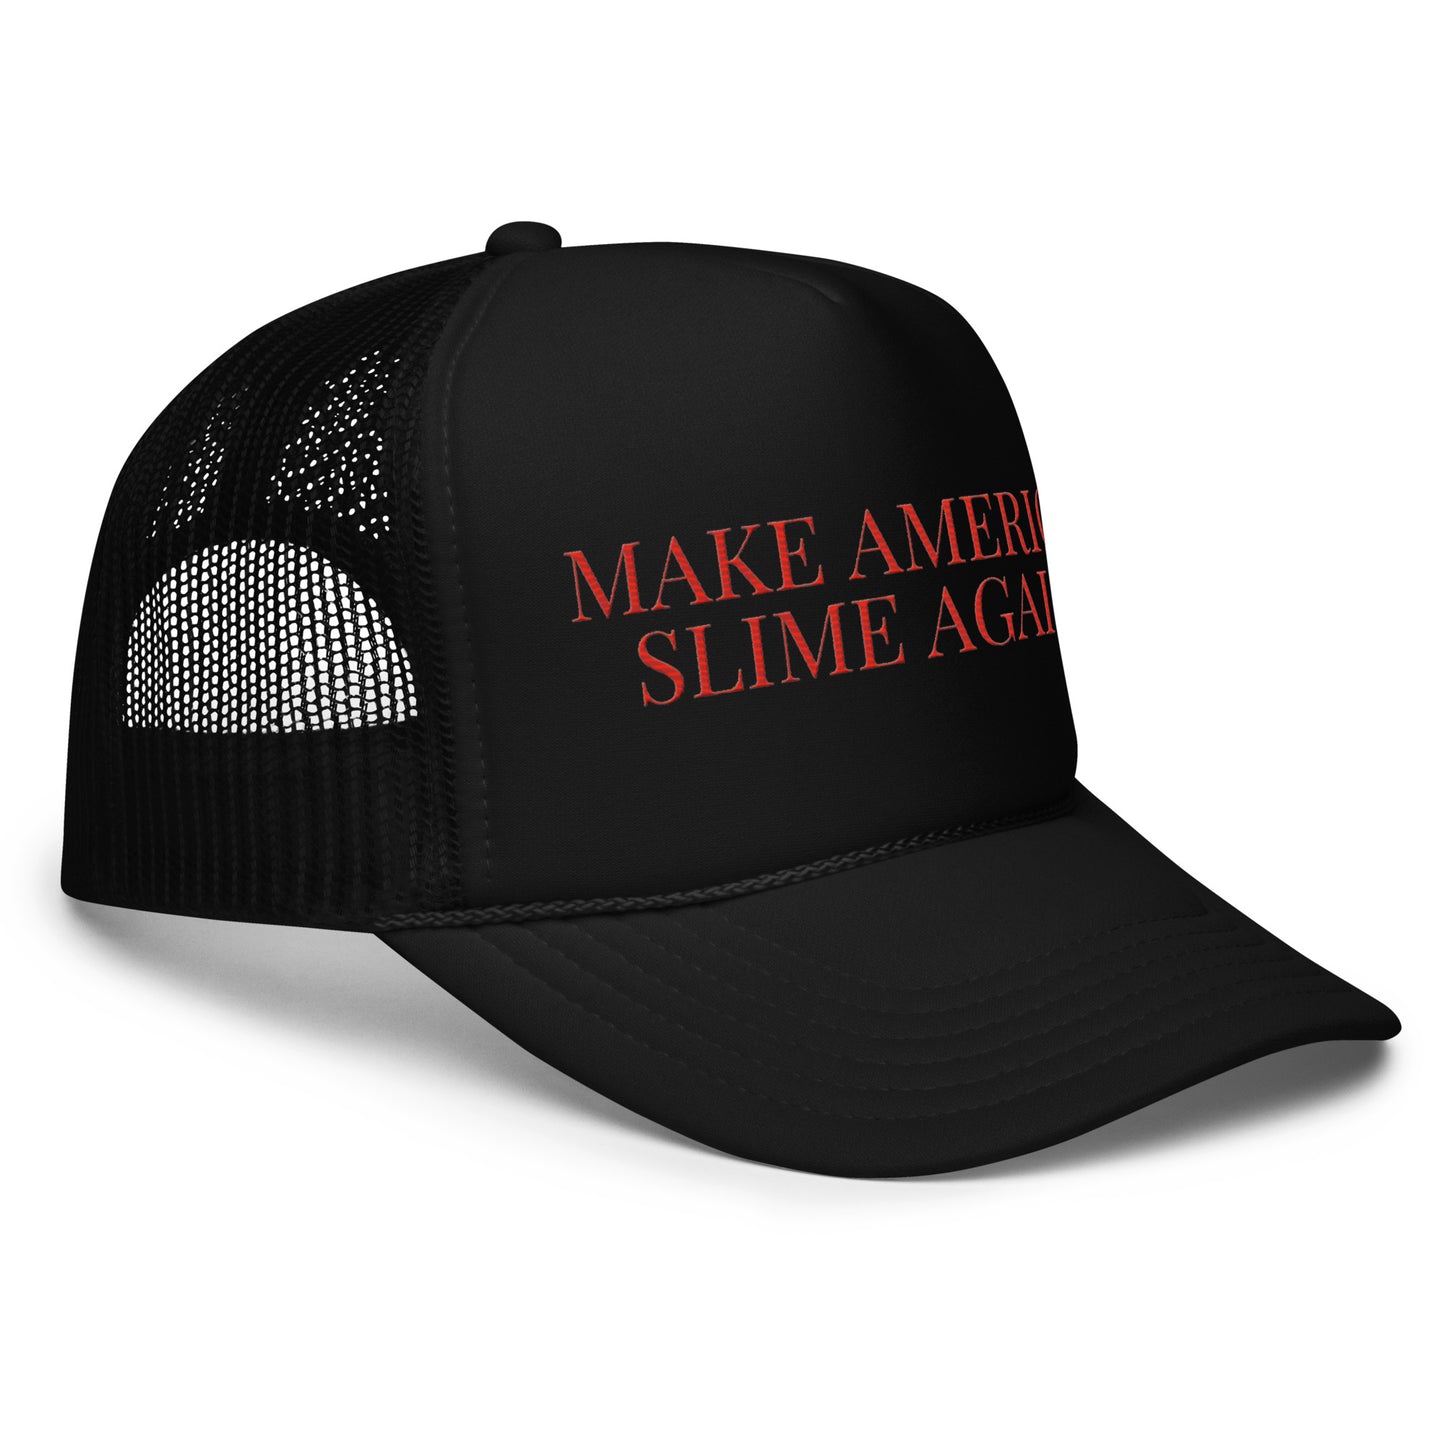 MAKE AMERICA SLIME AGAIN TRUCKER HAT